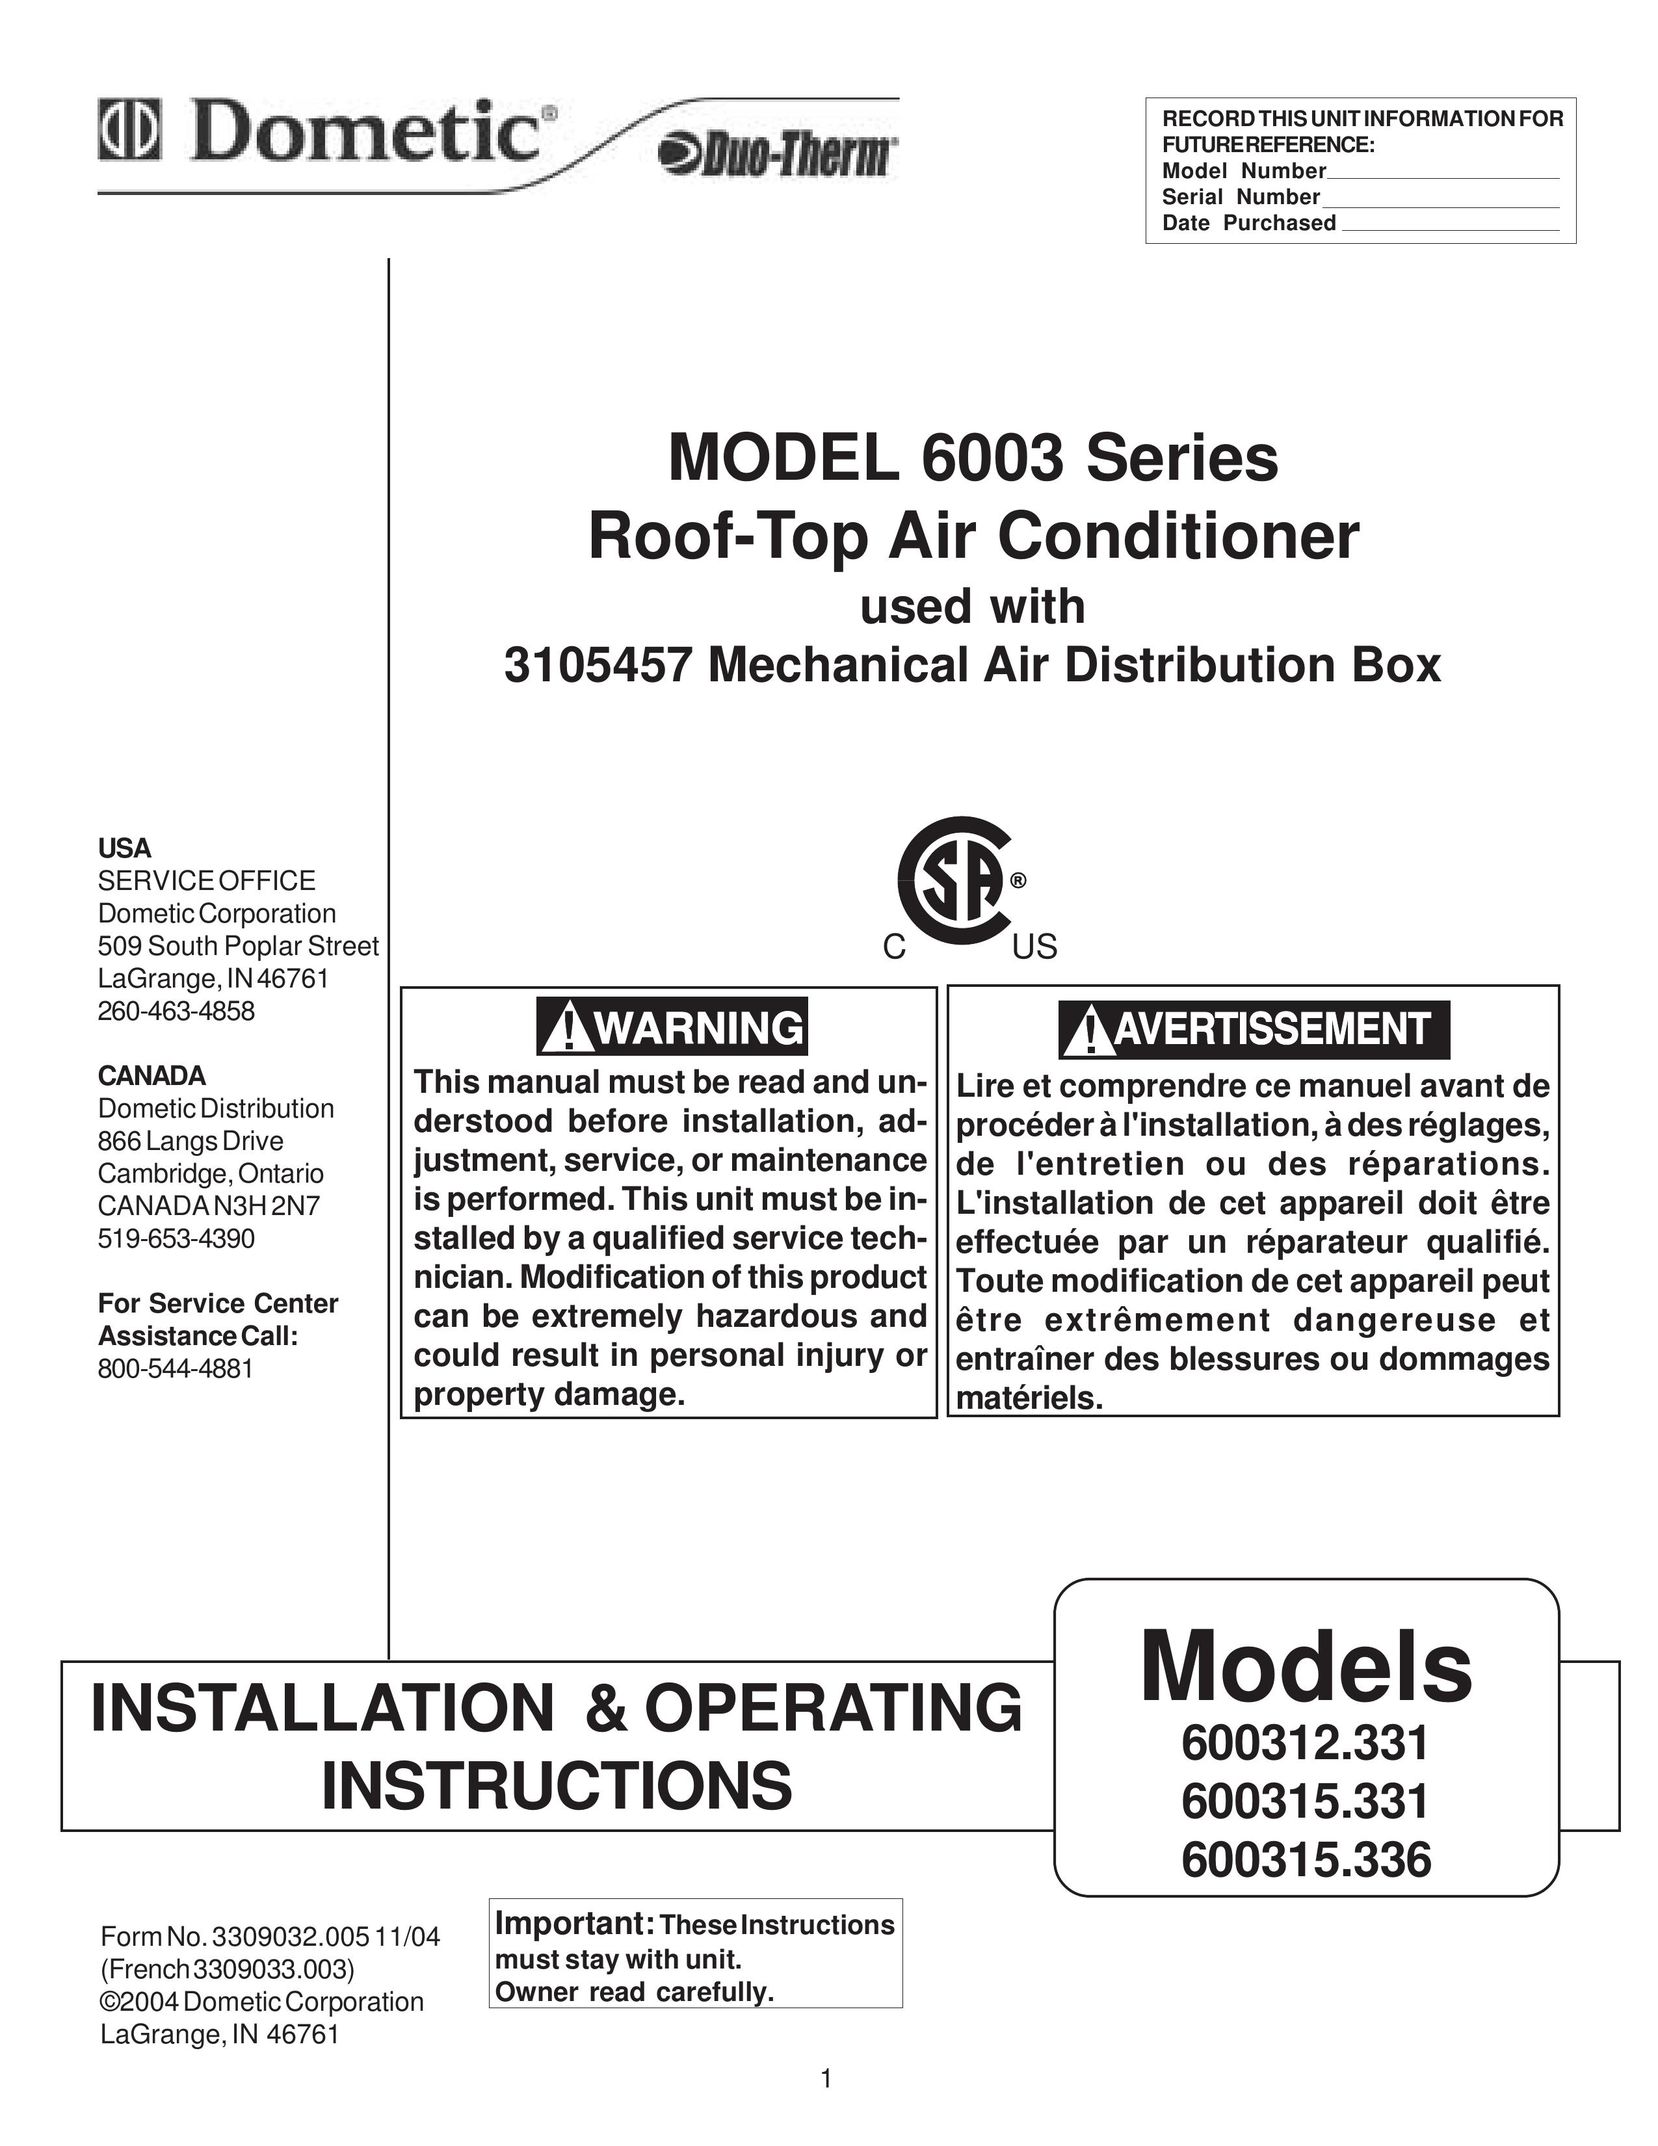 Dometic 600315.331 Air Conditioner User Manual